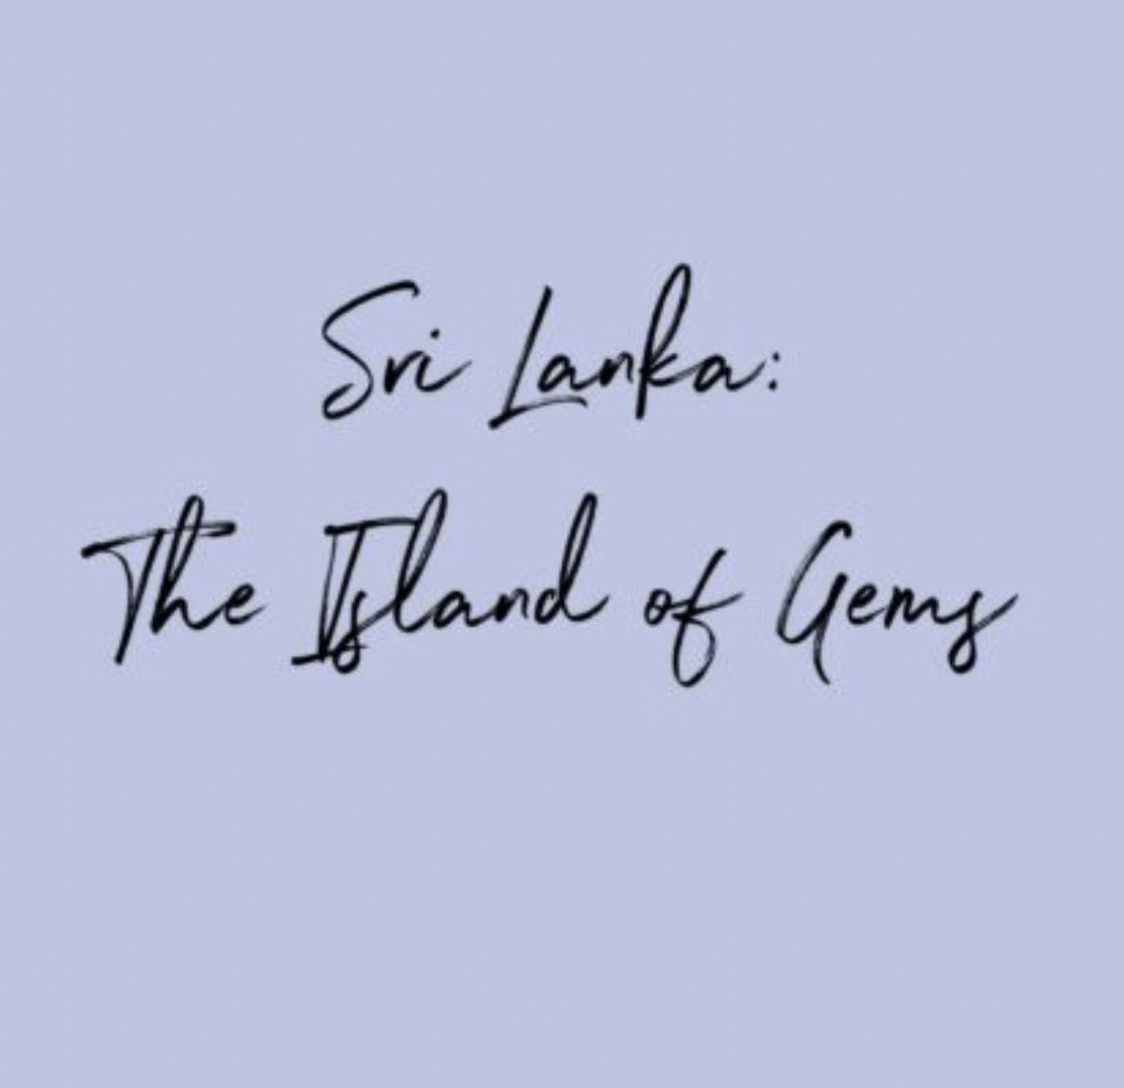 SRI LANKA: THE ISLAND OF GEMS